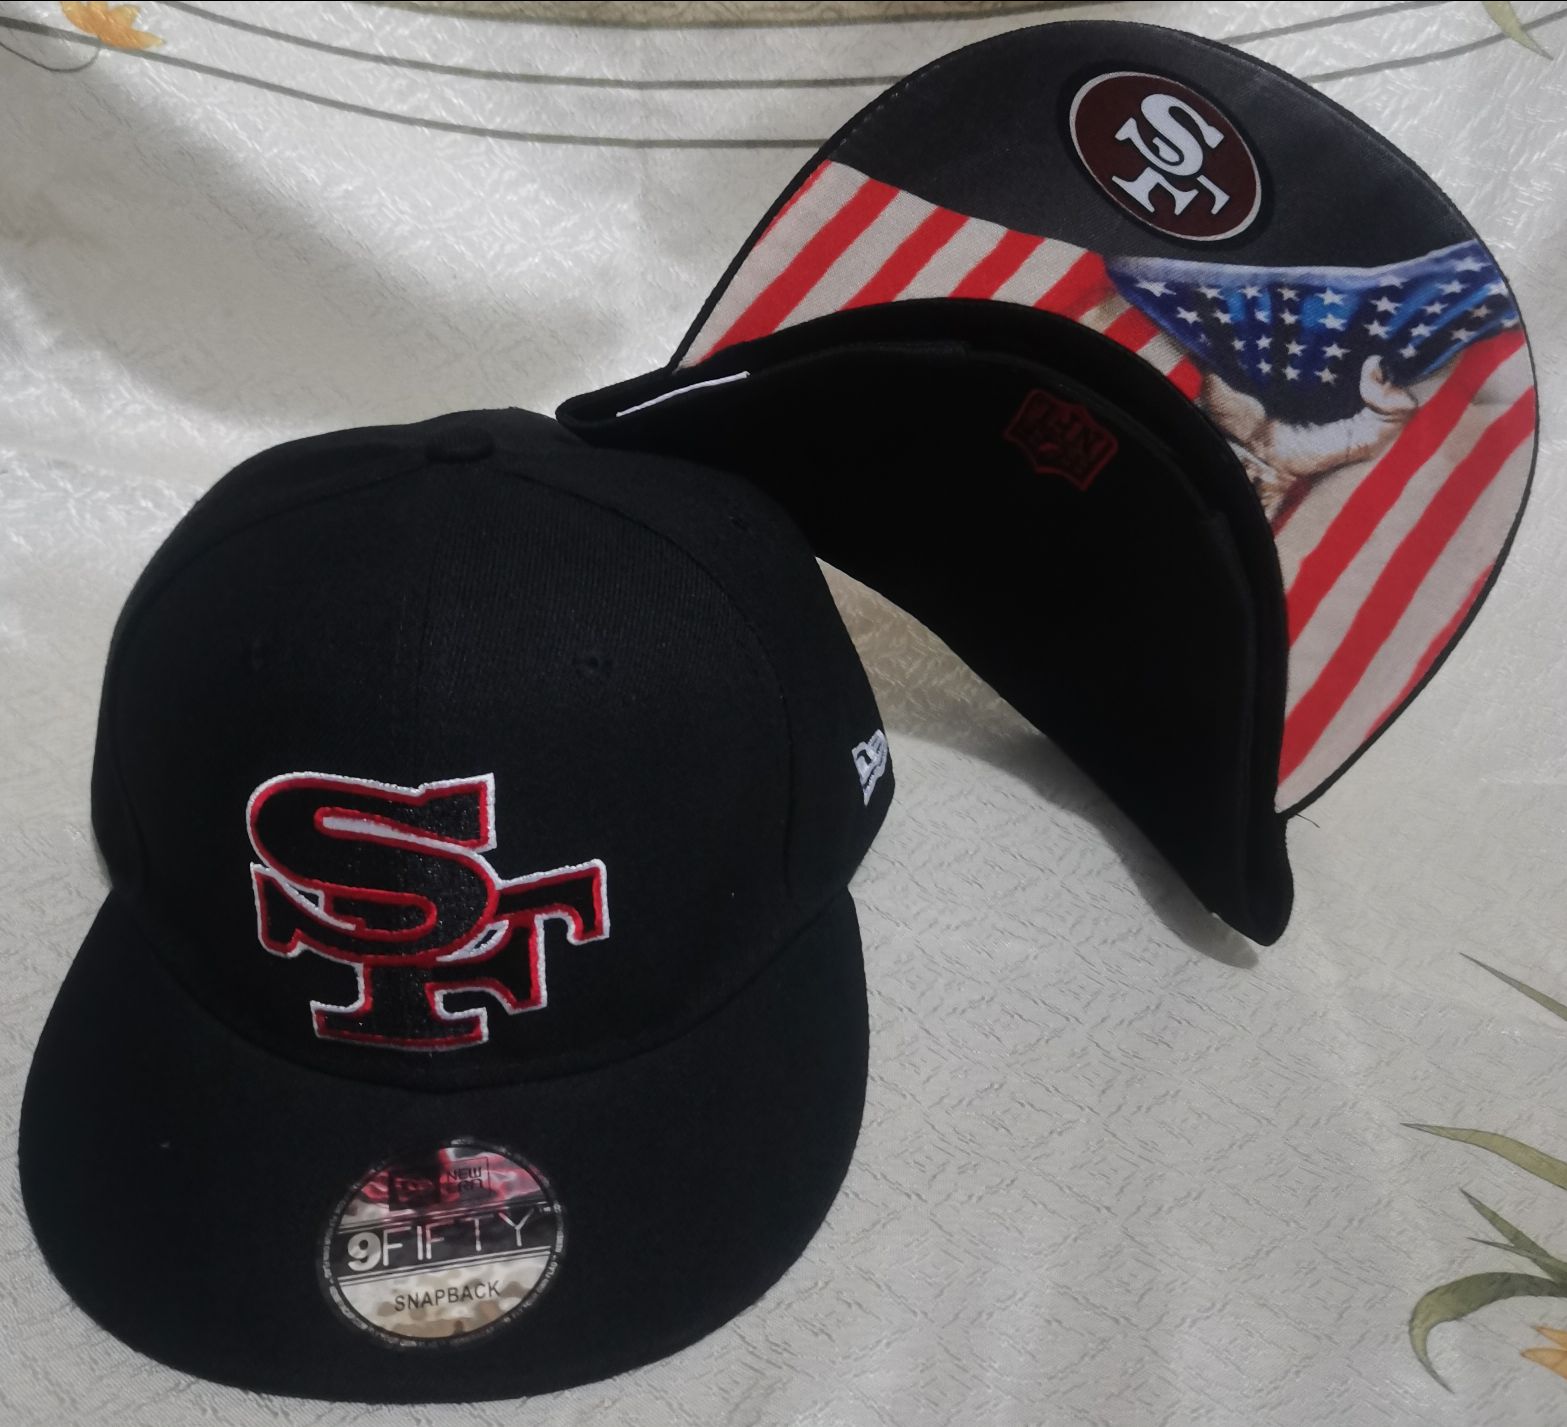 2021 NFL San Francisco 49ers #5 hat->nfl hats->Sports Caps